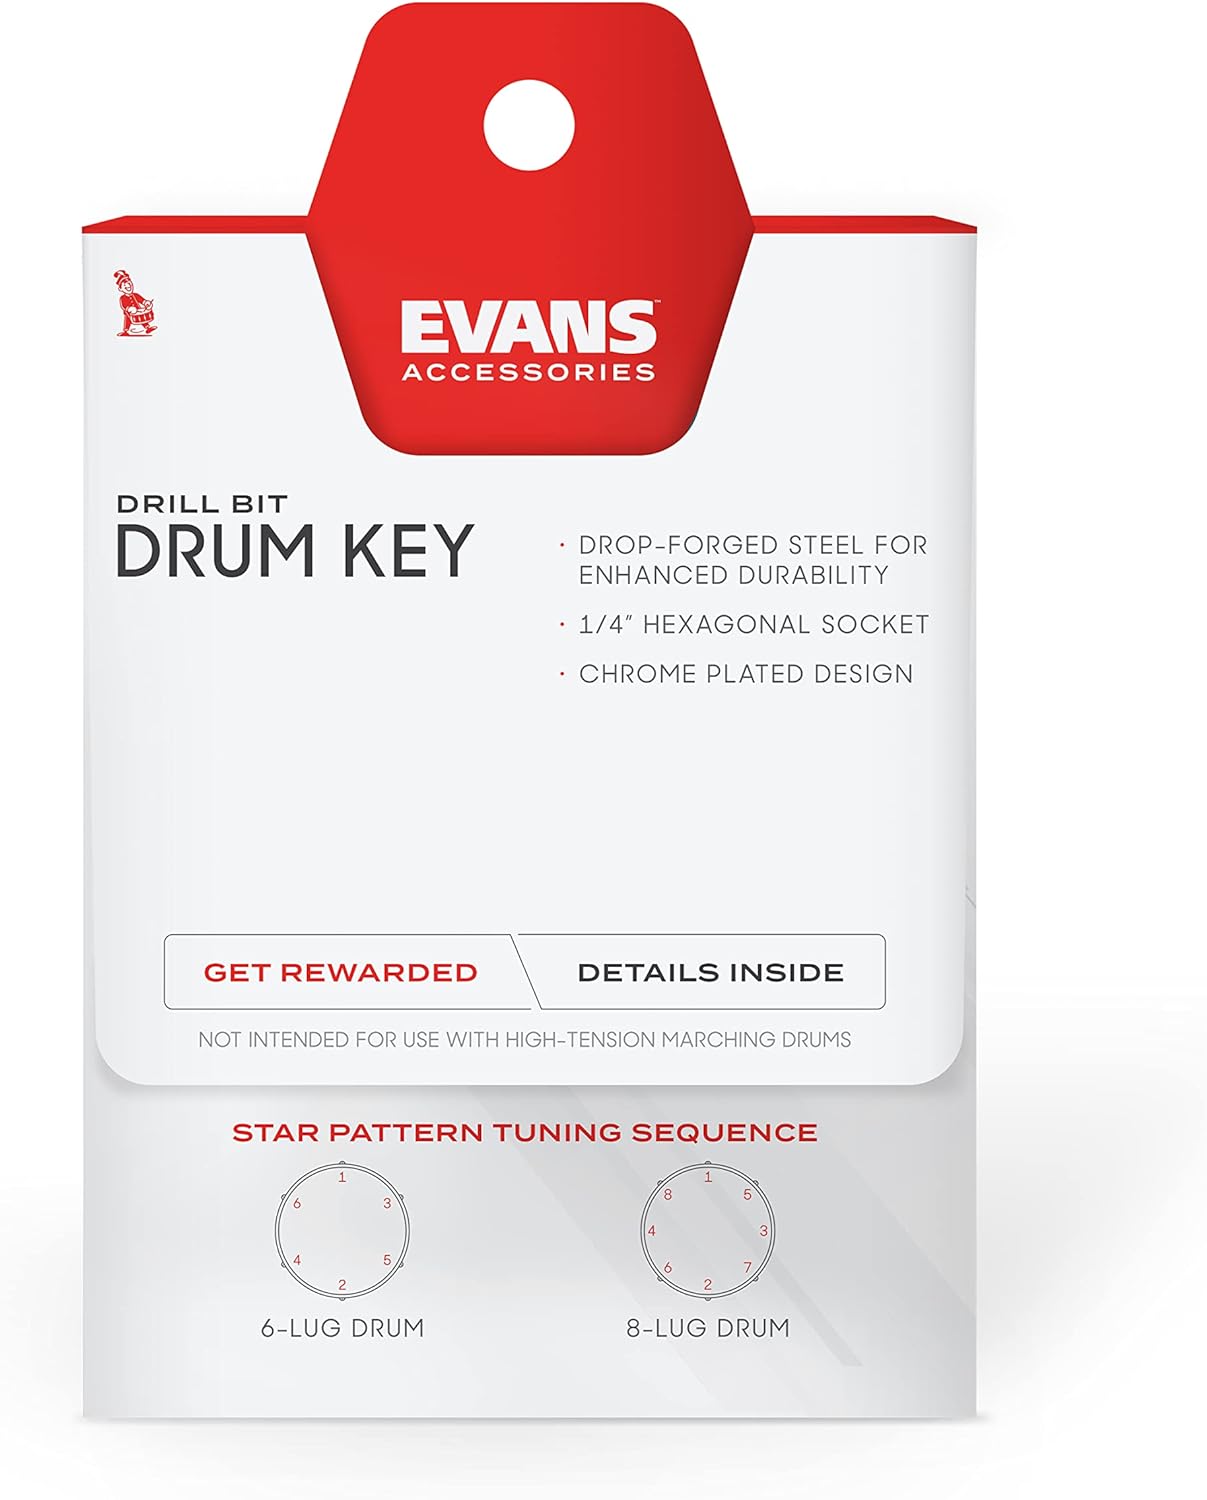 EVANS Drill Bit Drum key DABK